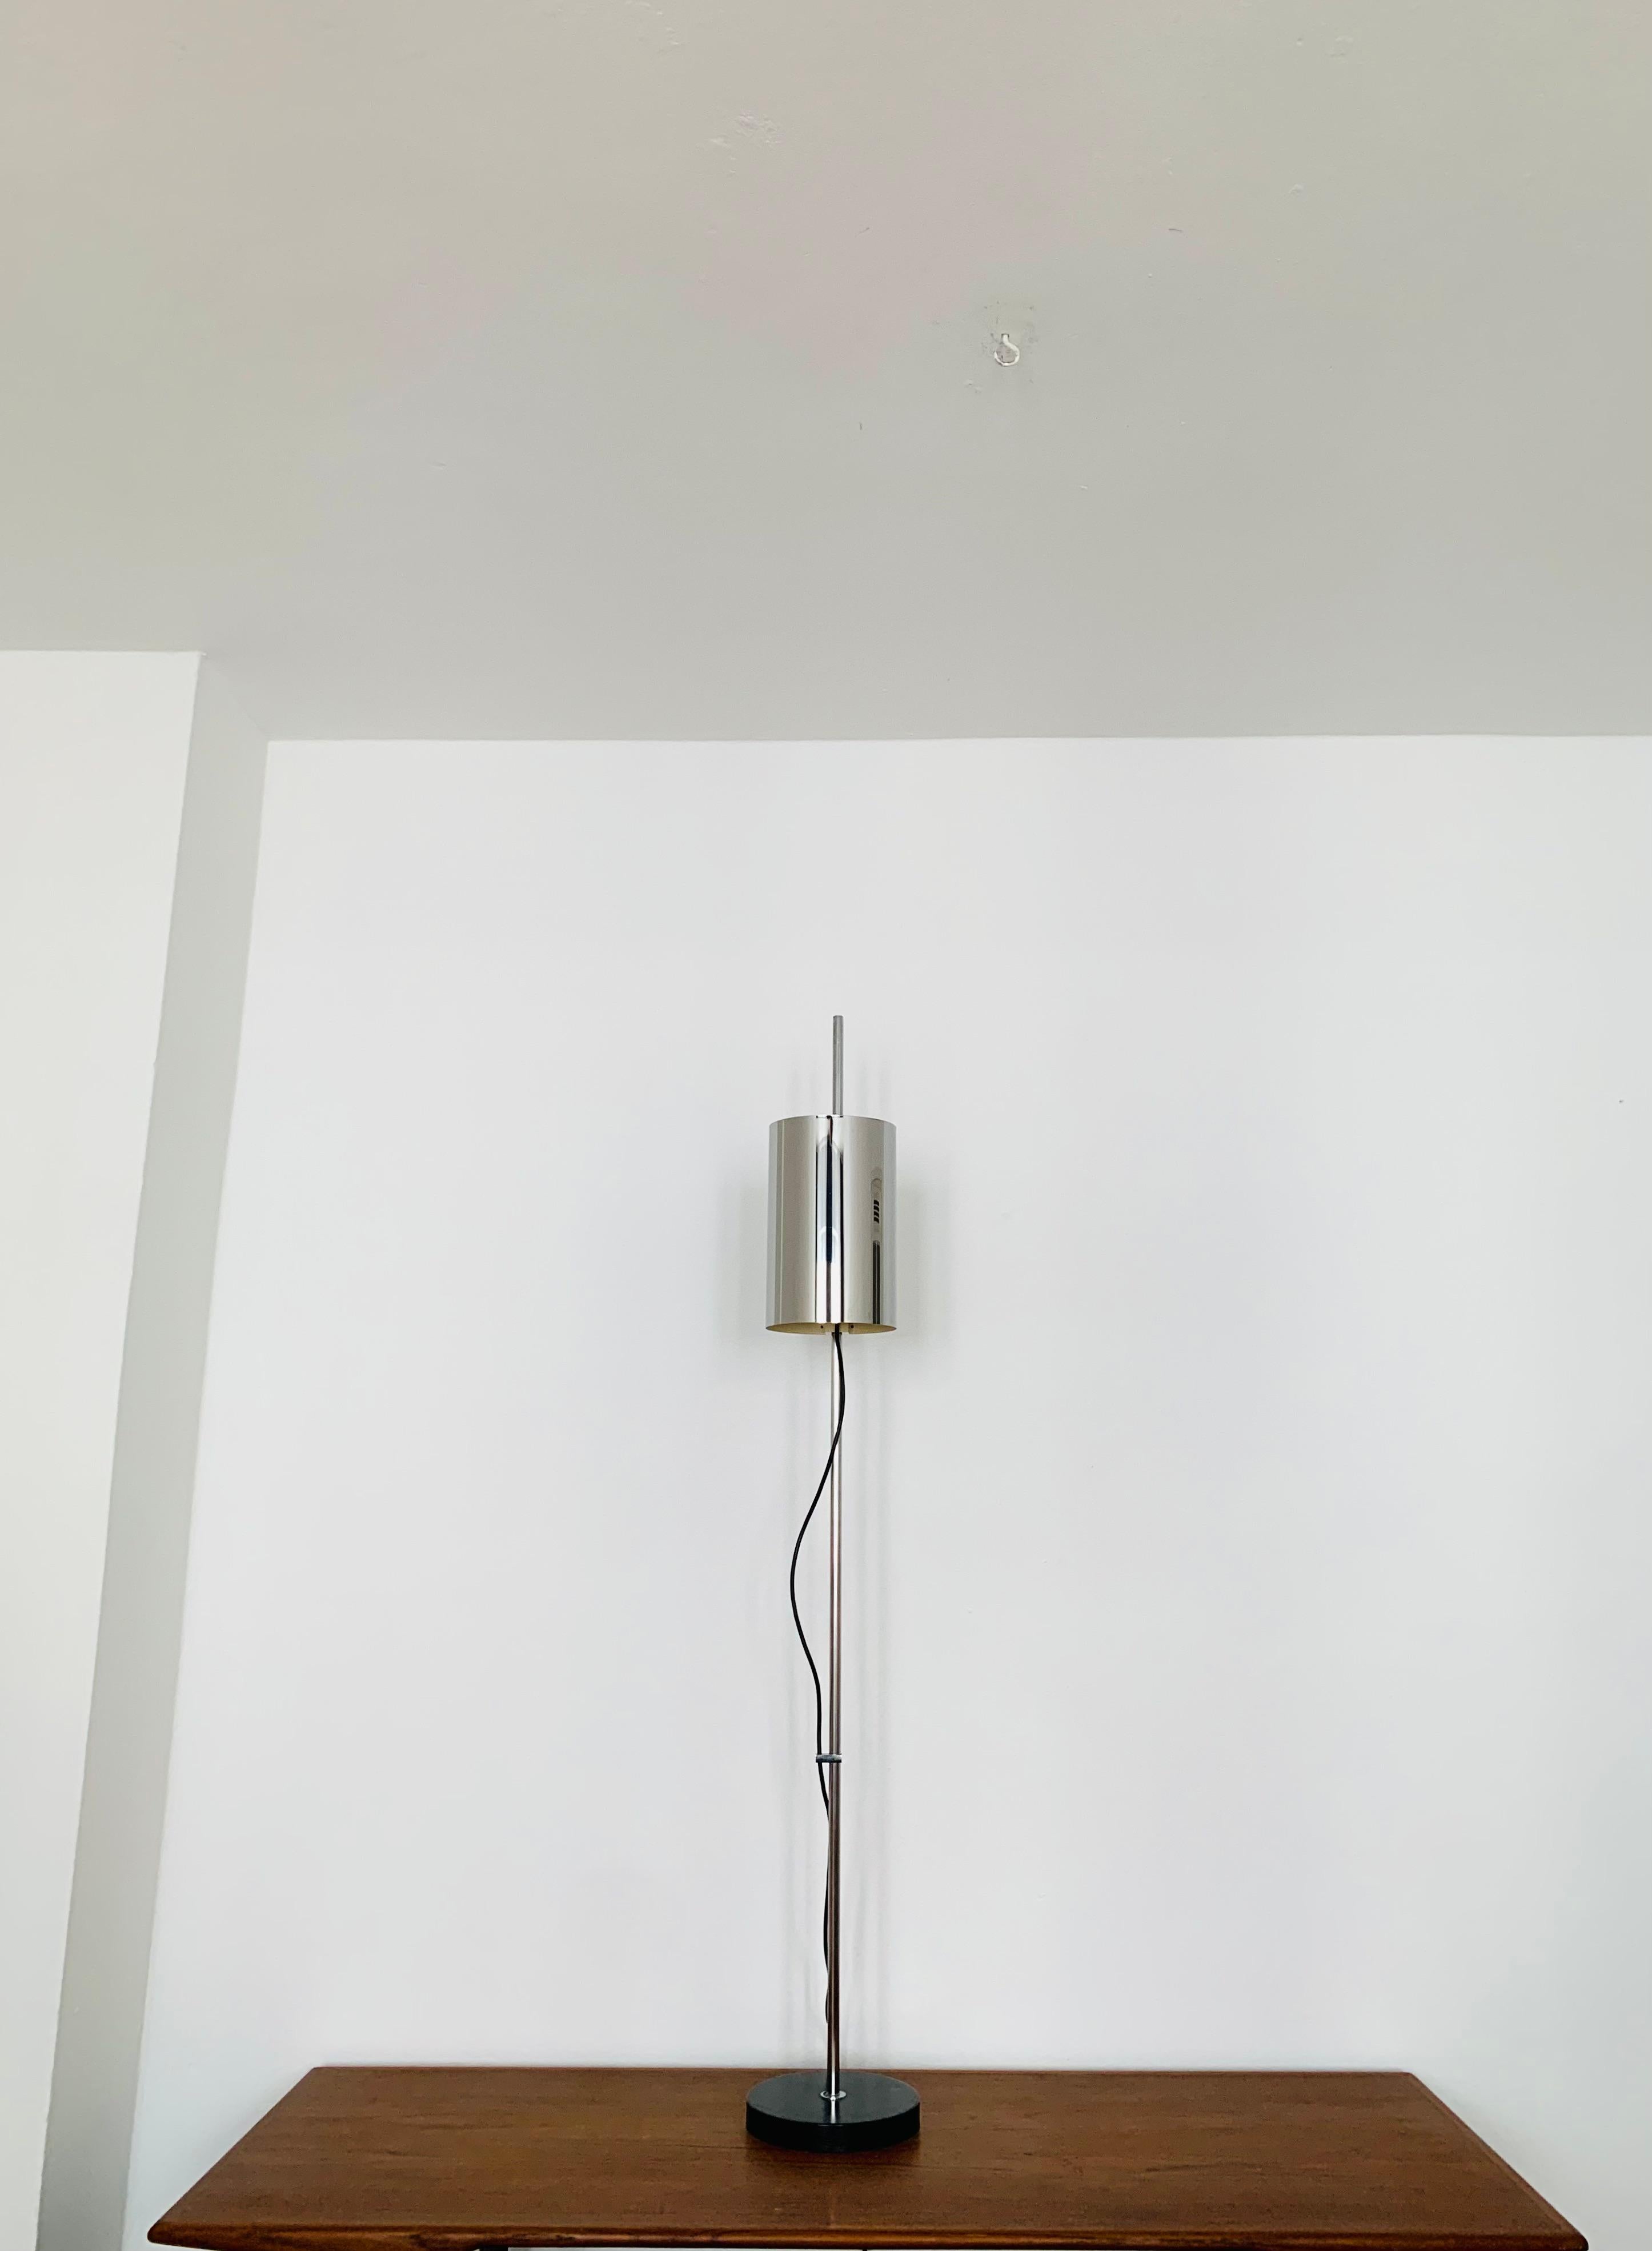 Chromed floor lamp by Raak In Good Condition For Sale In München, DE